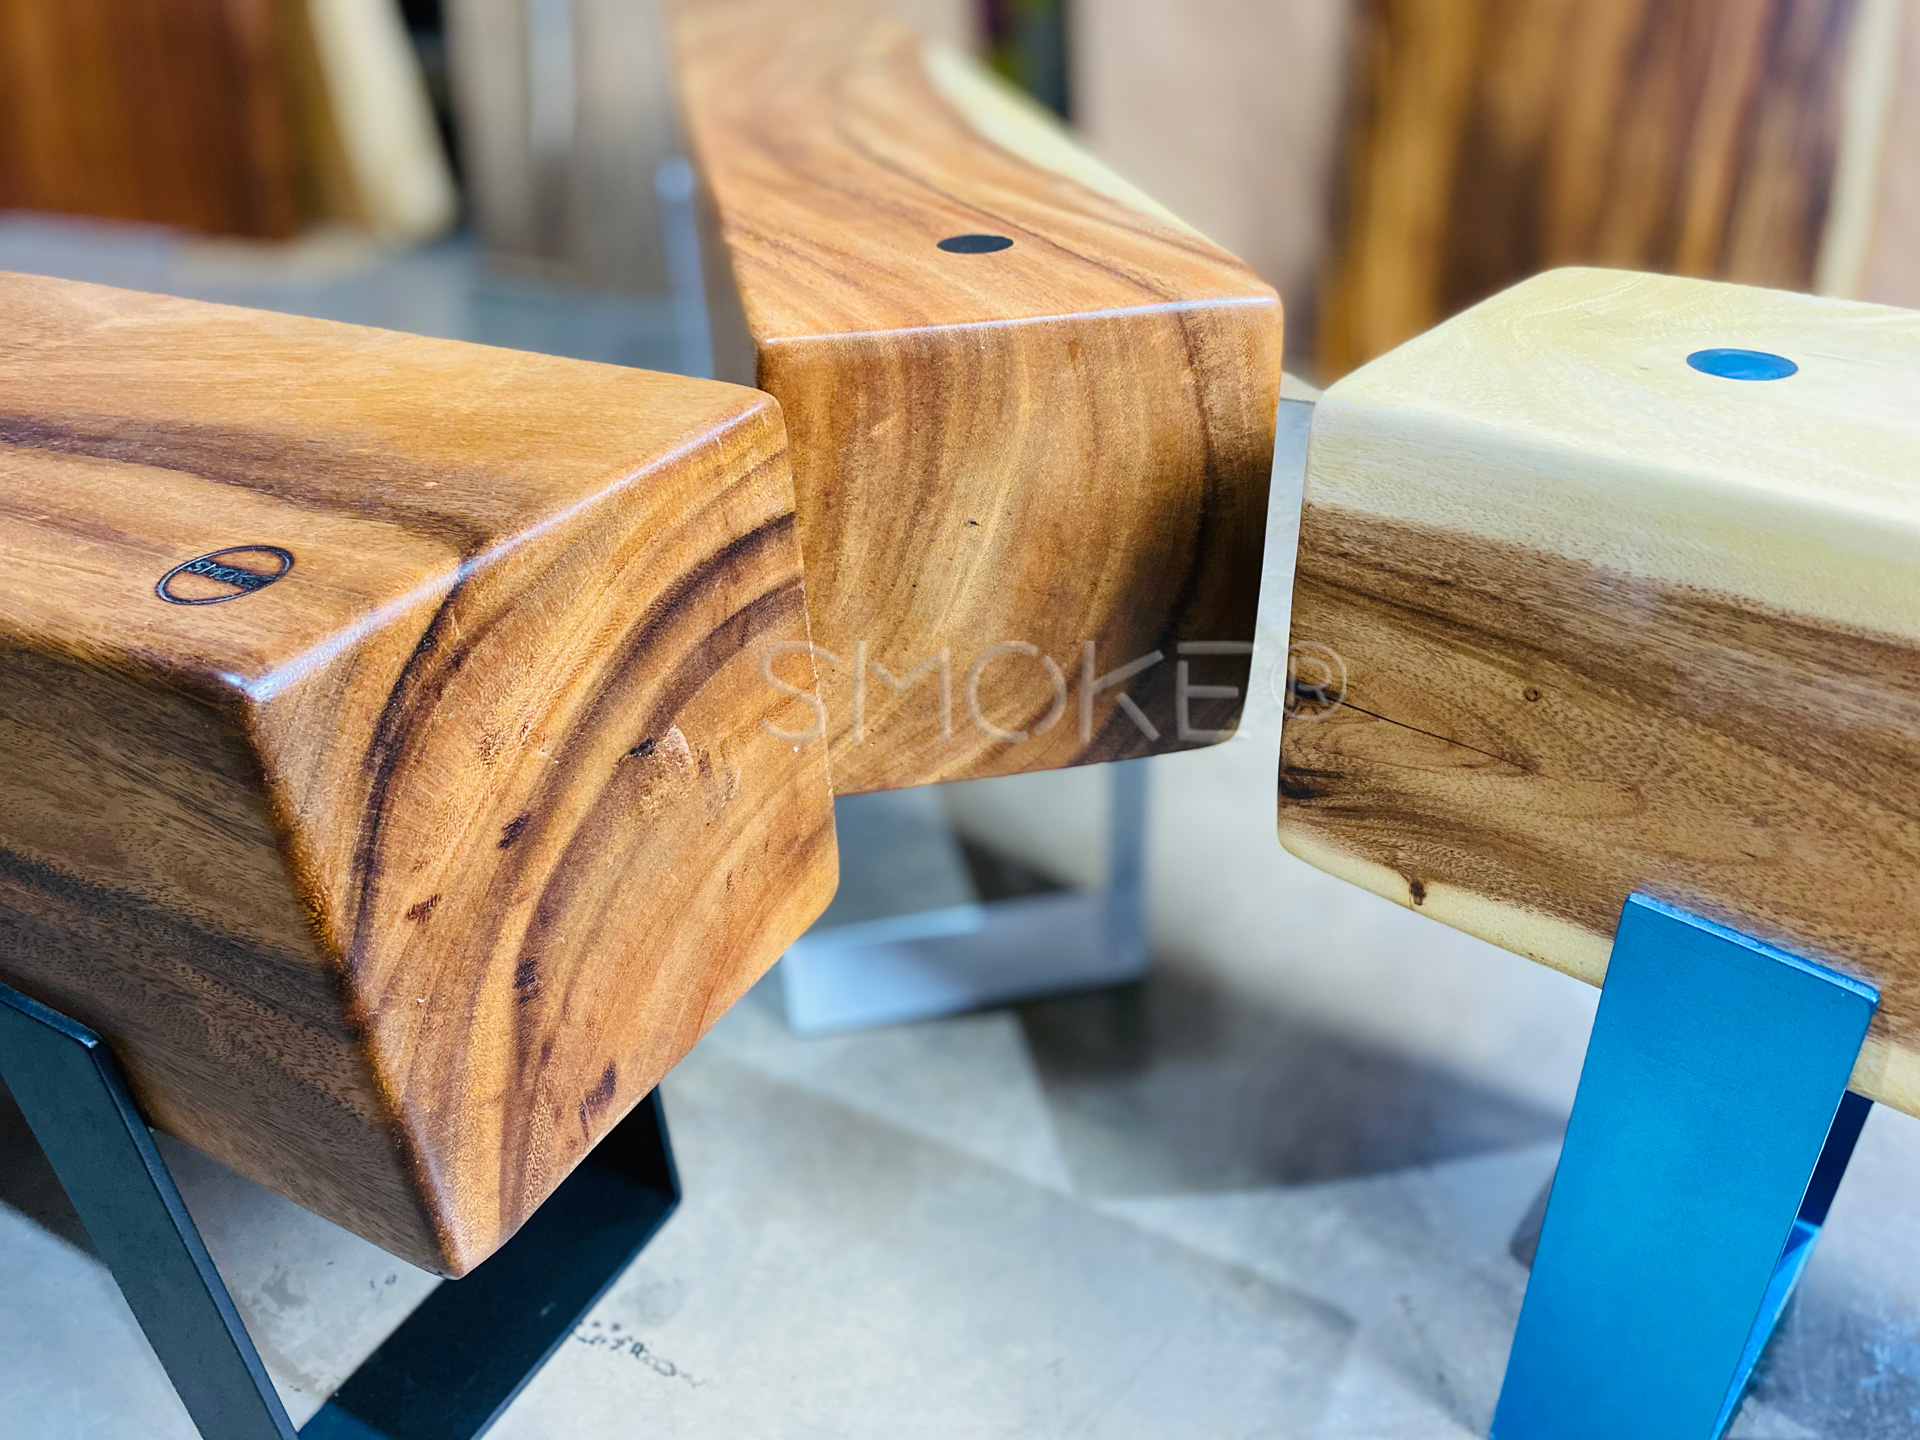 Logan suar wood bench singapore collection